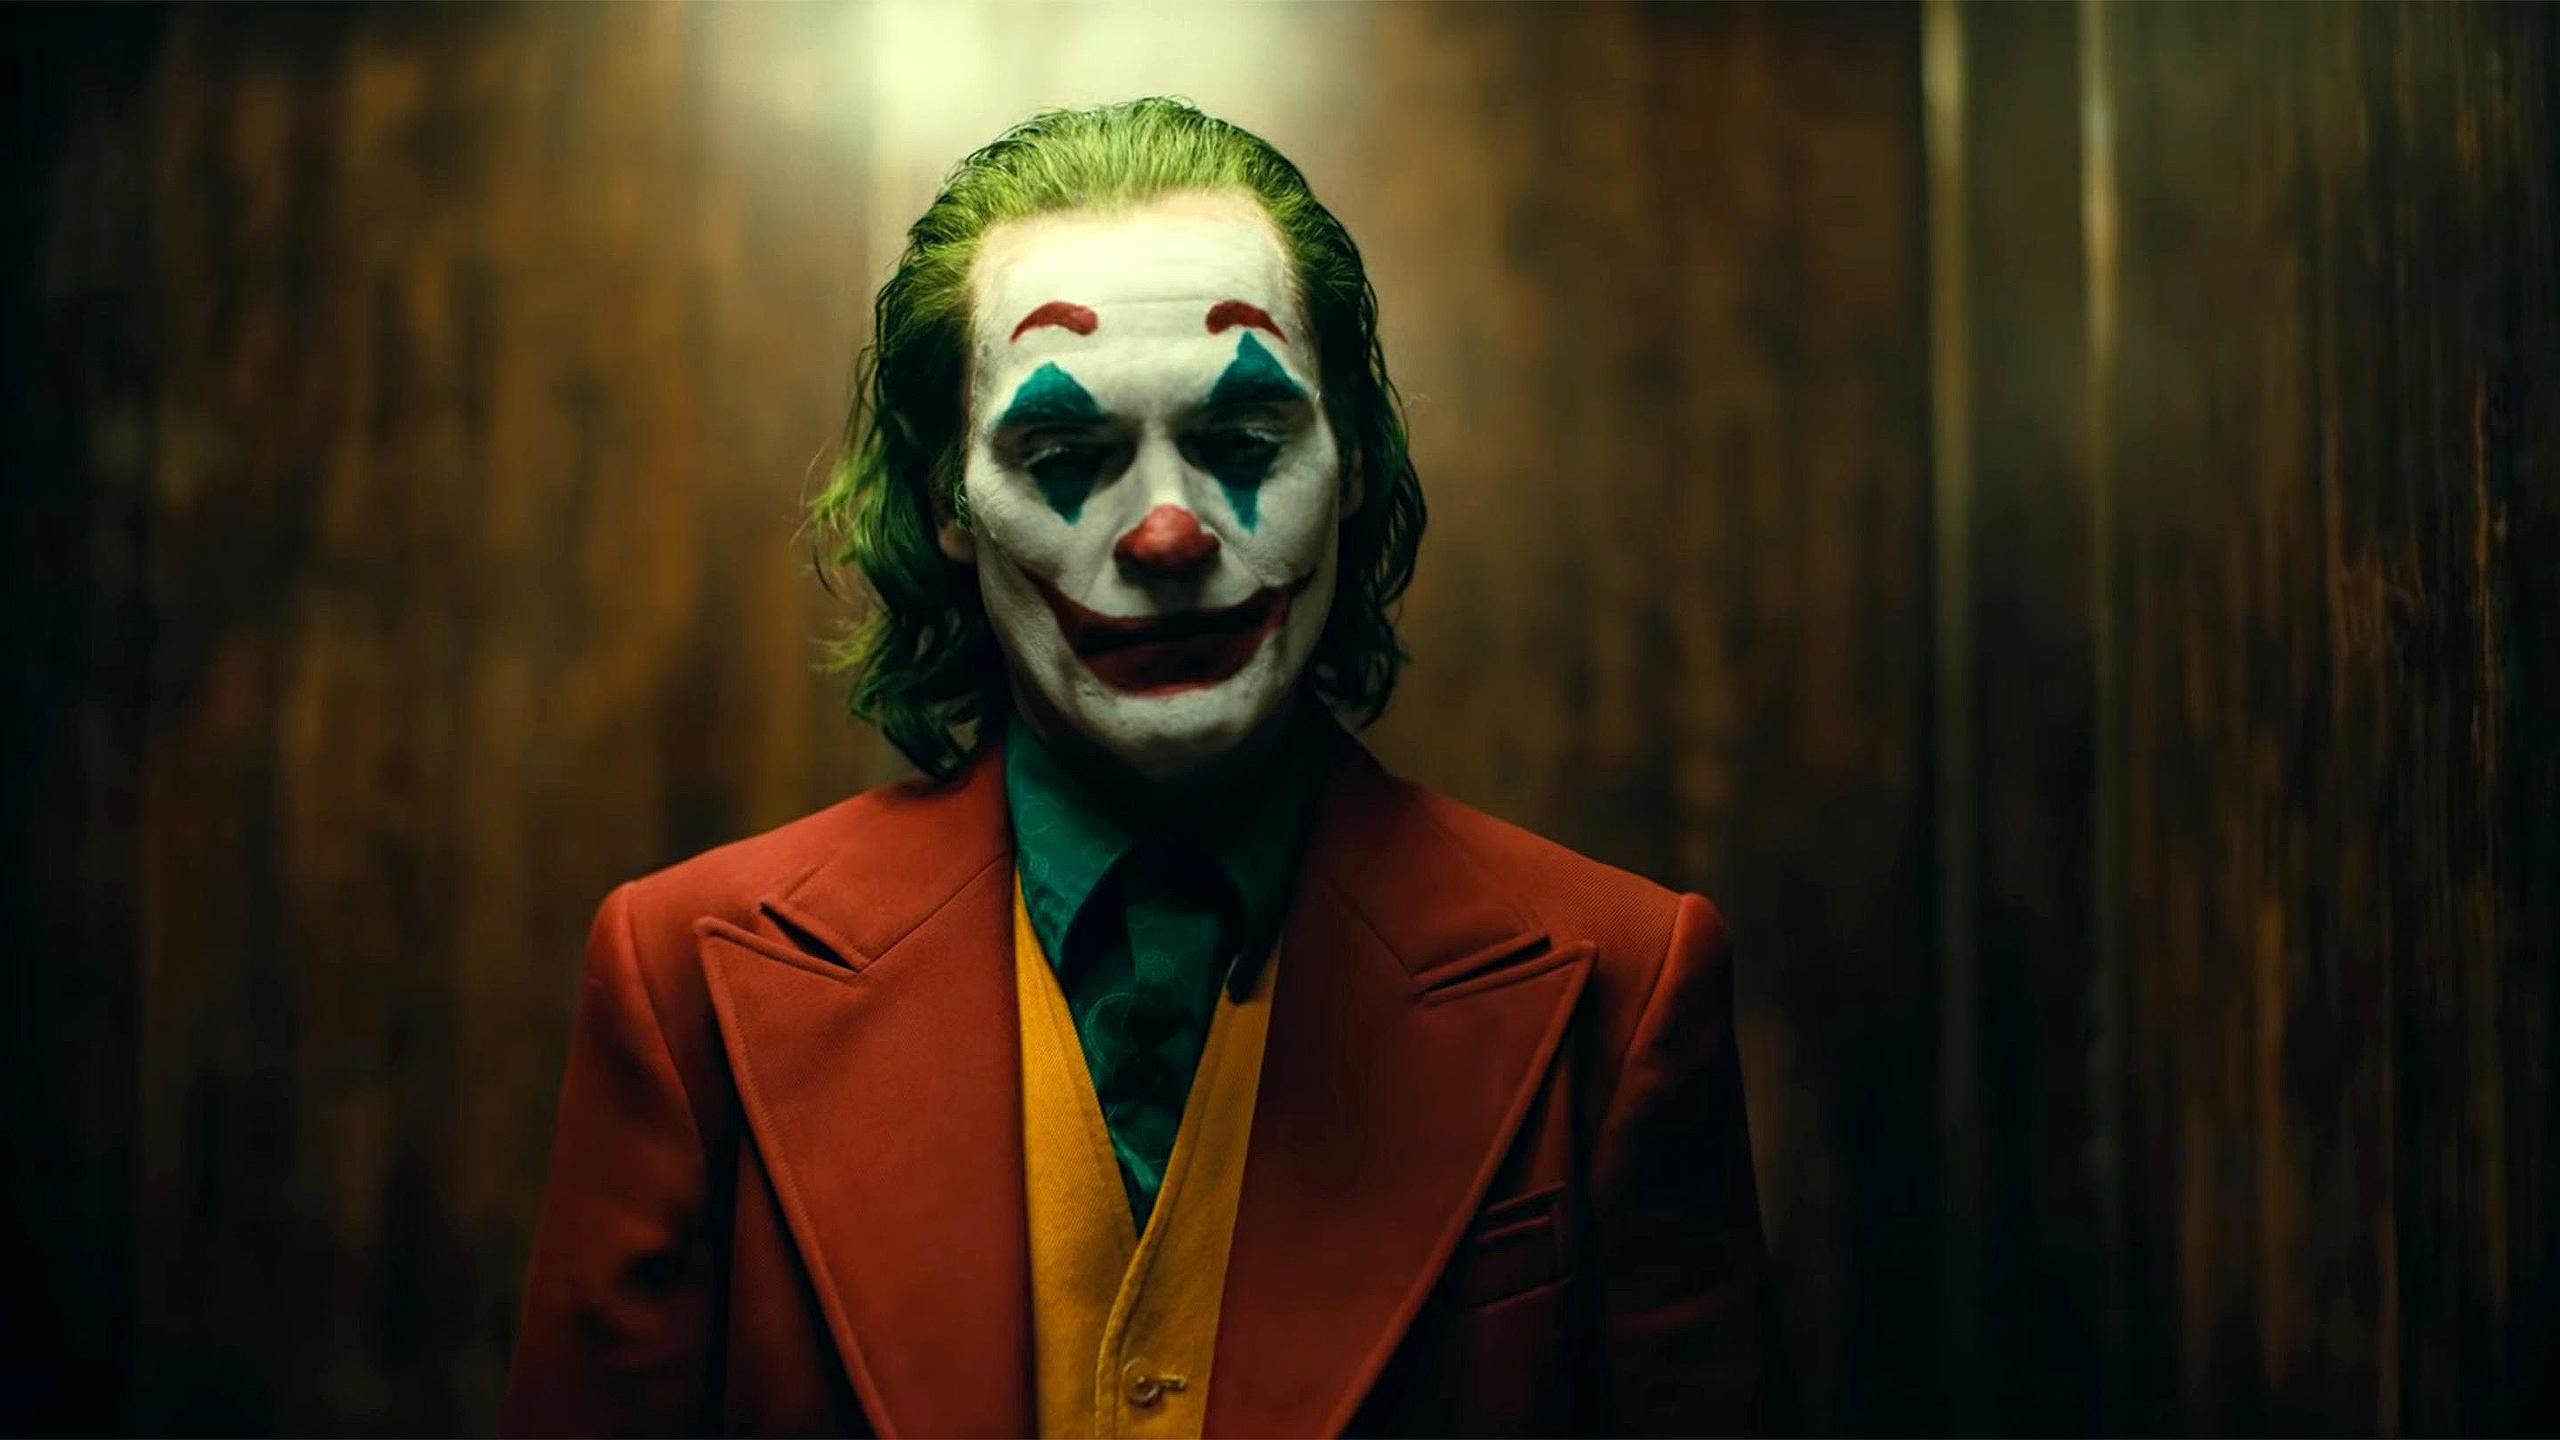 Joaquin Phoenix As Joker Wallpaper, HD Movies 4K Wallpaper, Image